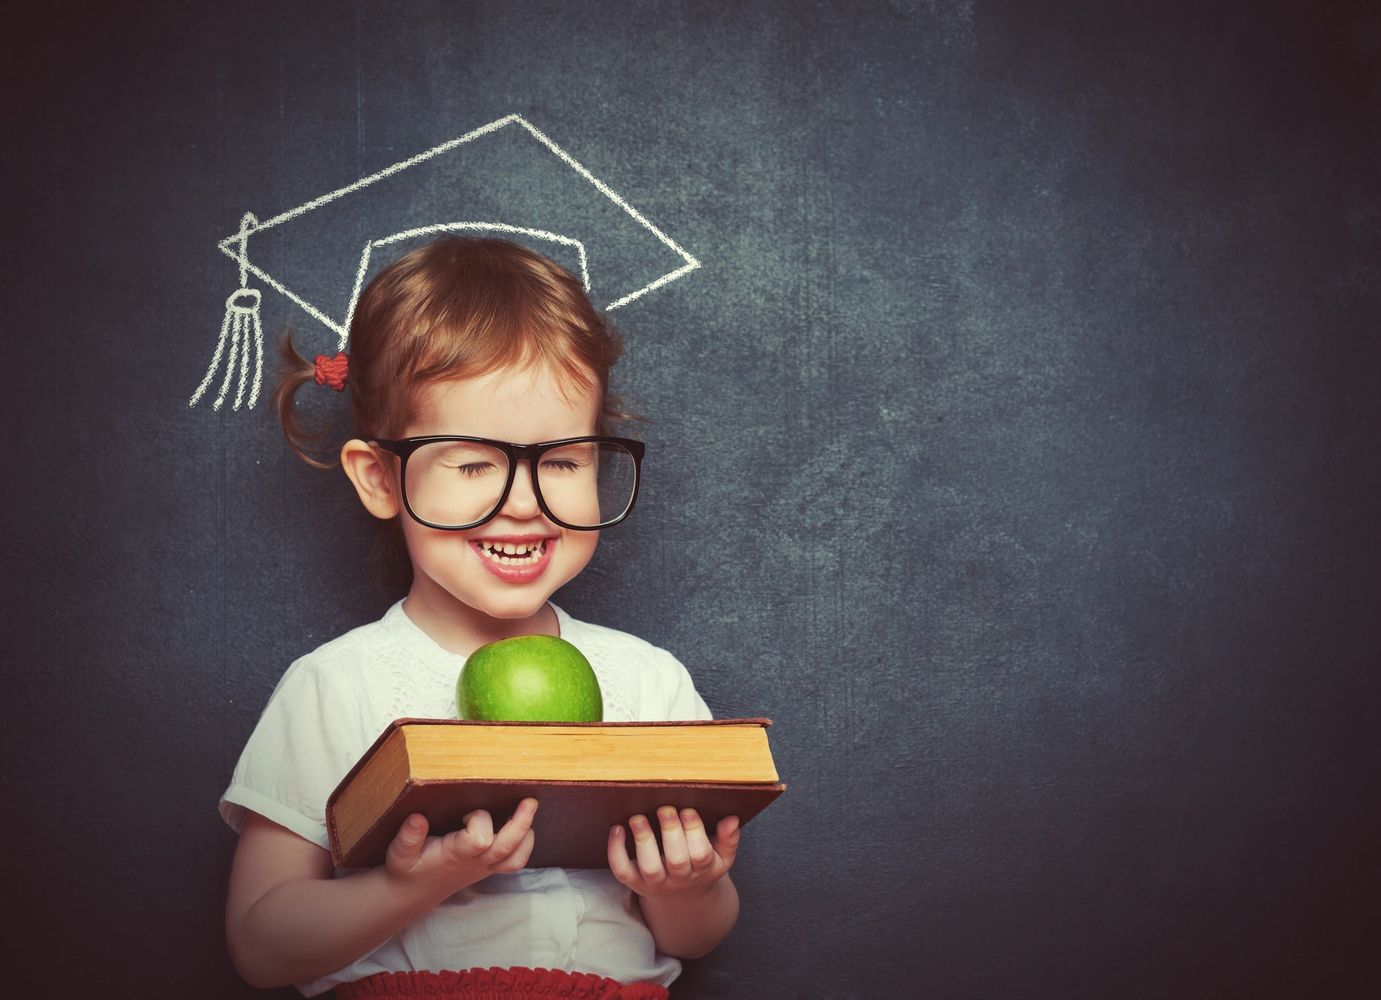 Child smiling wearing big framed glasses holding apple & book in front a of chalk graduation hat